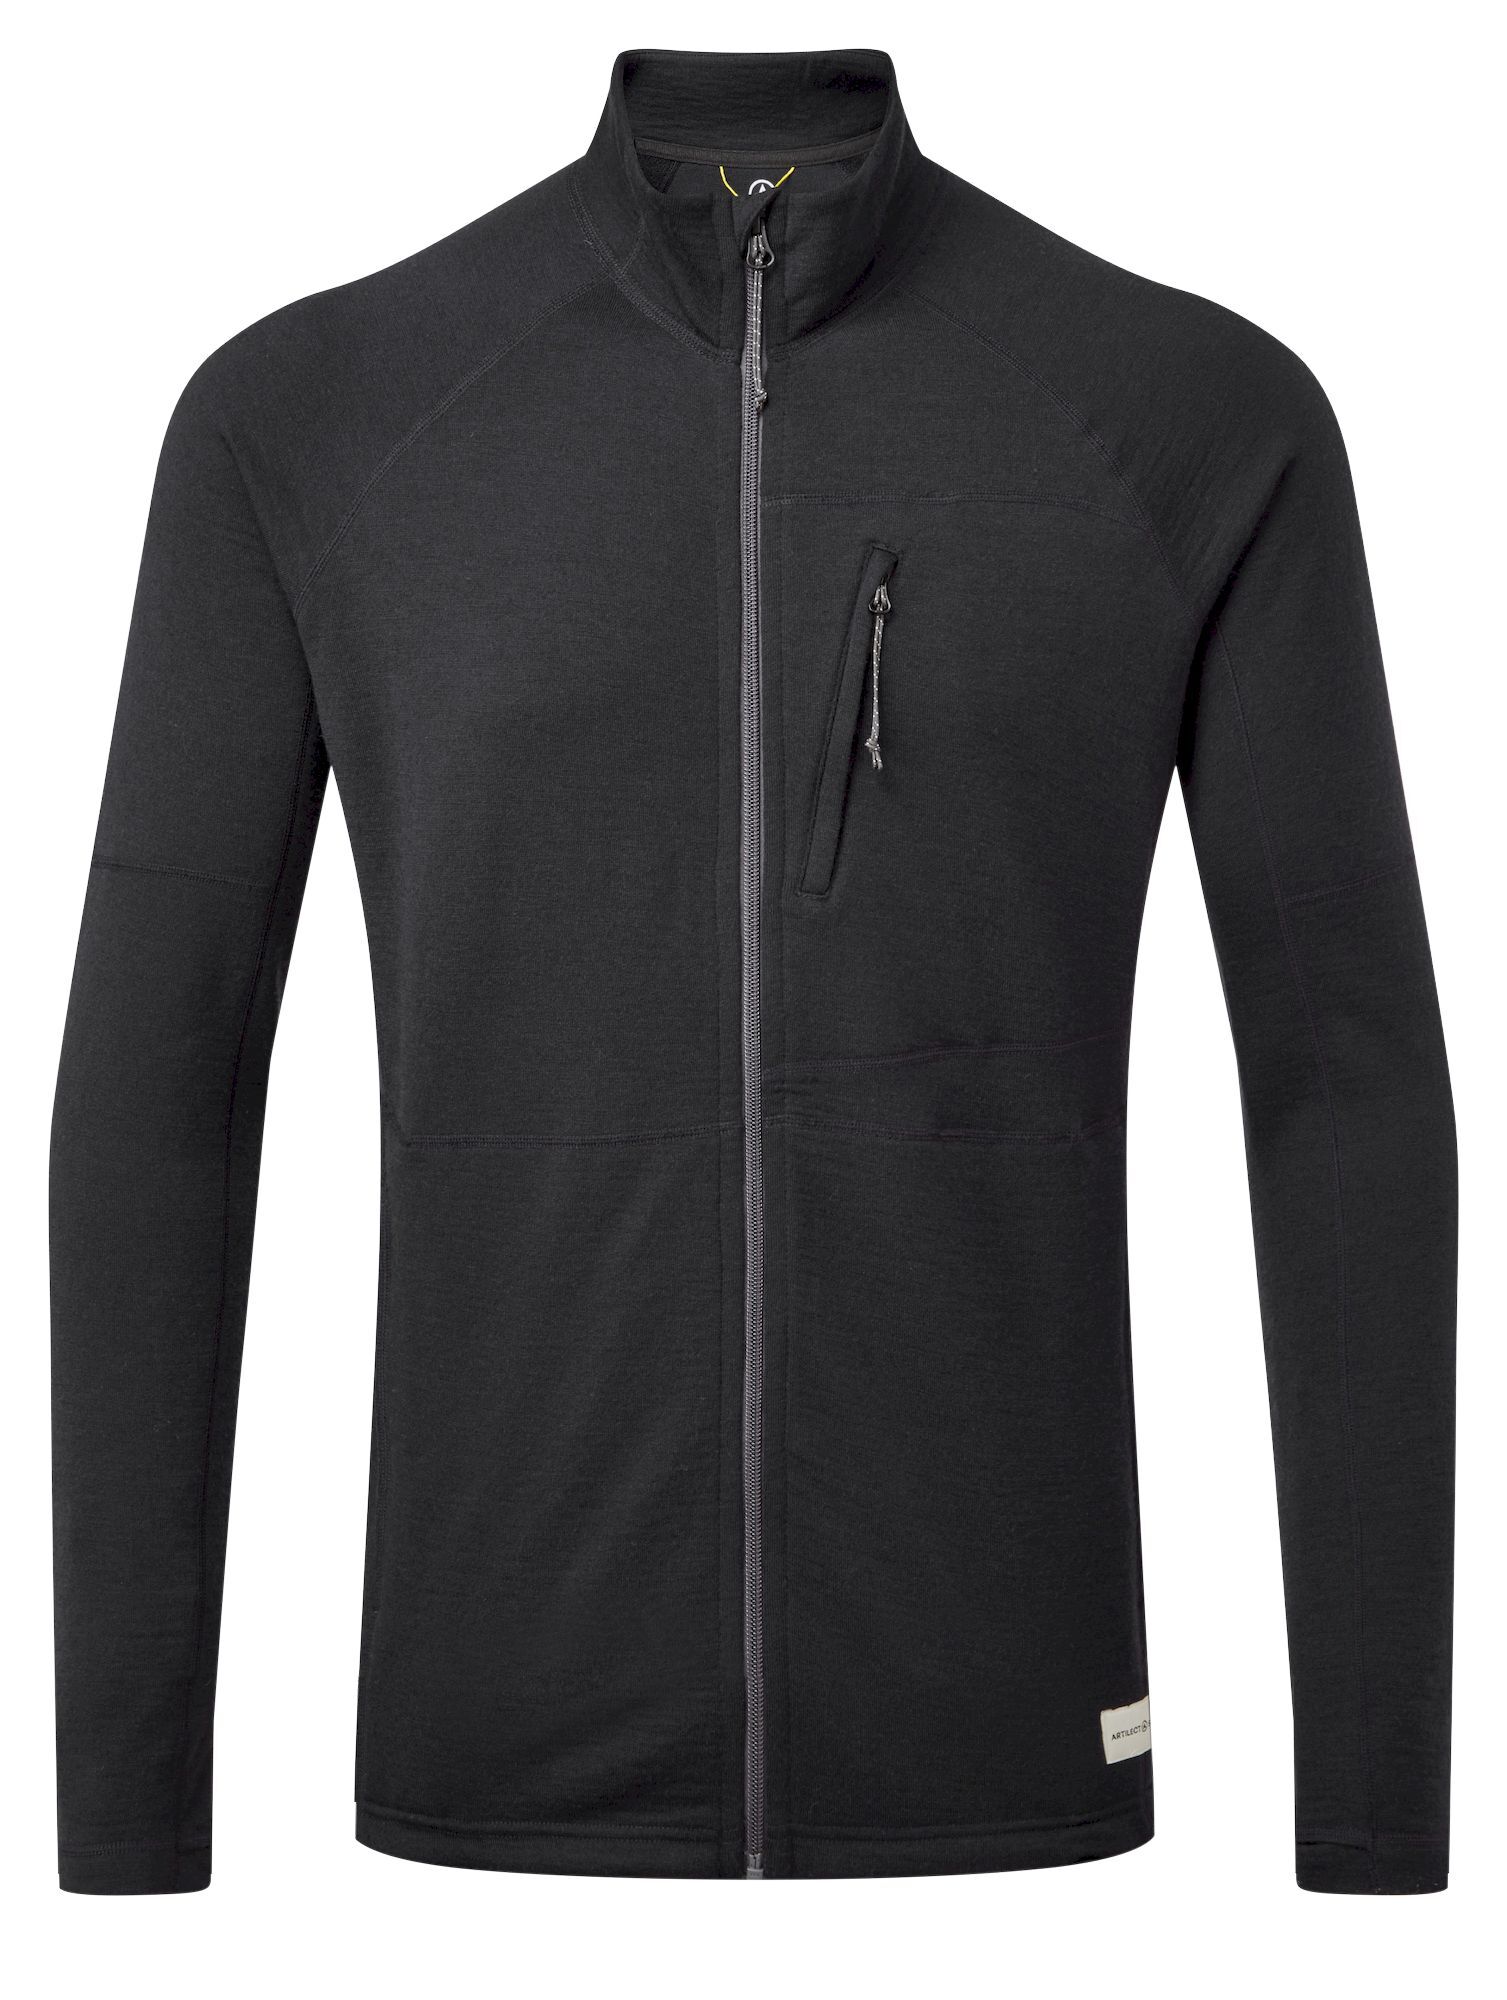 Artilect Eldorado Merino Jacket - Fleece jacket - Men's